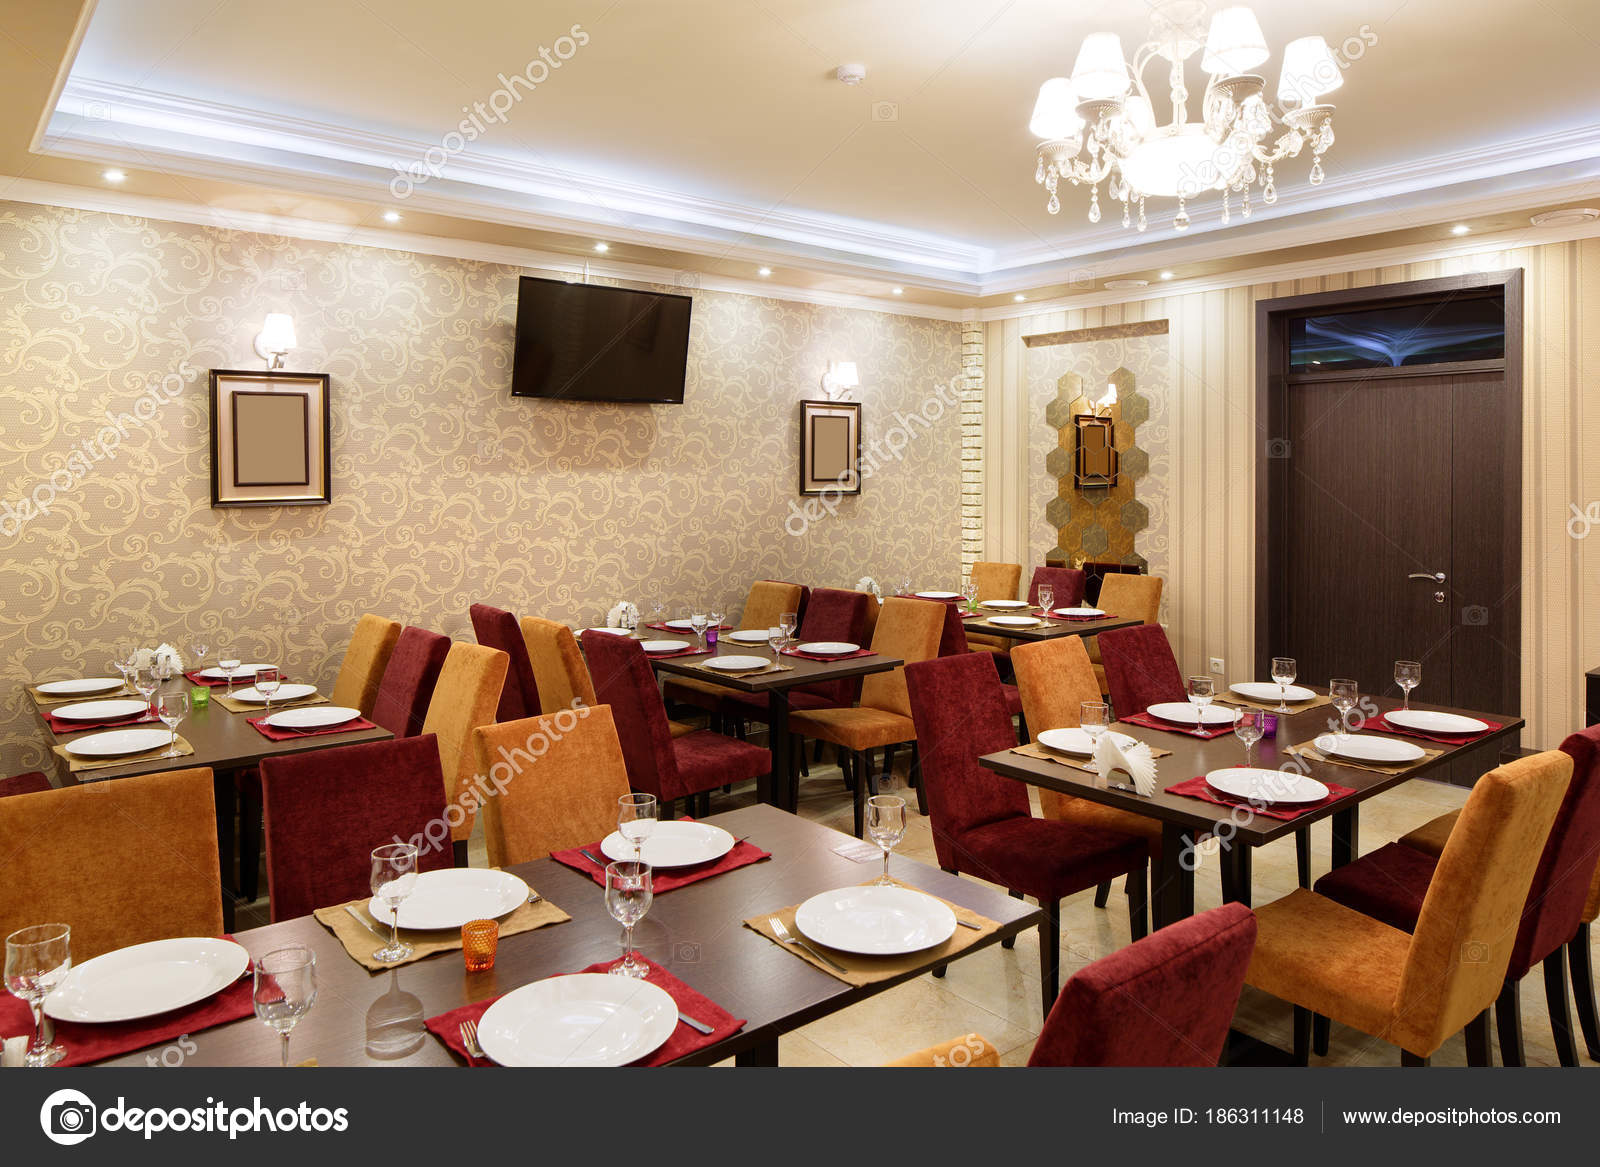 European Restaurant In Bright Colors Stock Photo C Fiphoto